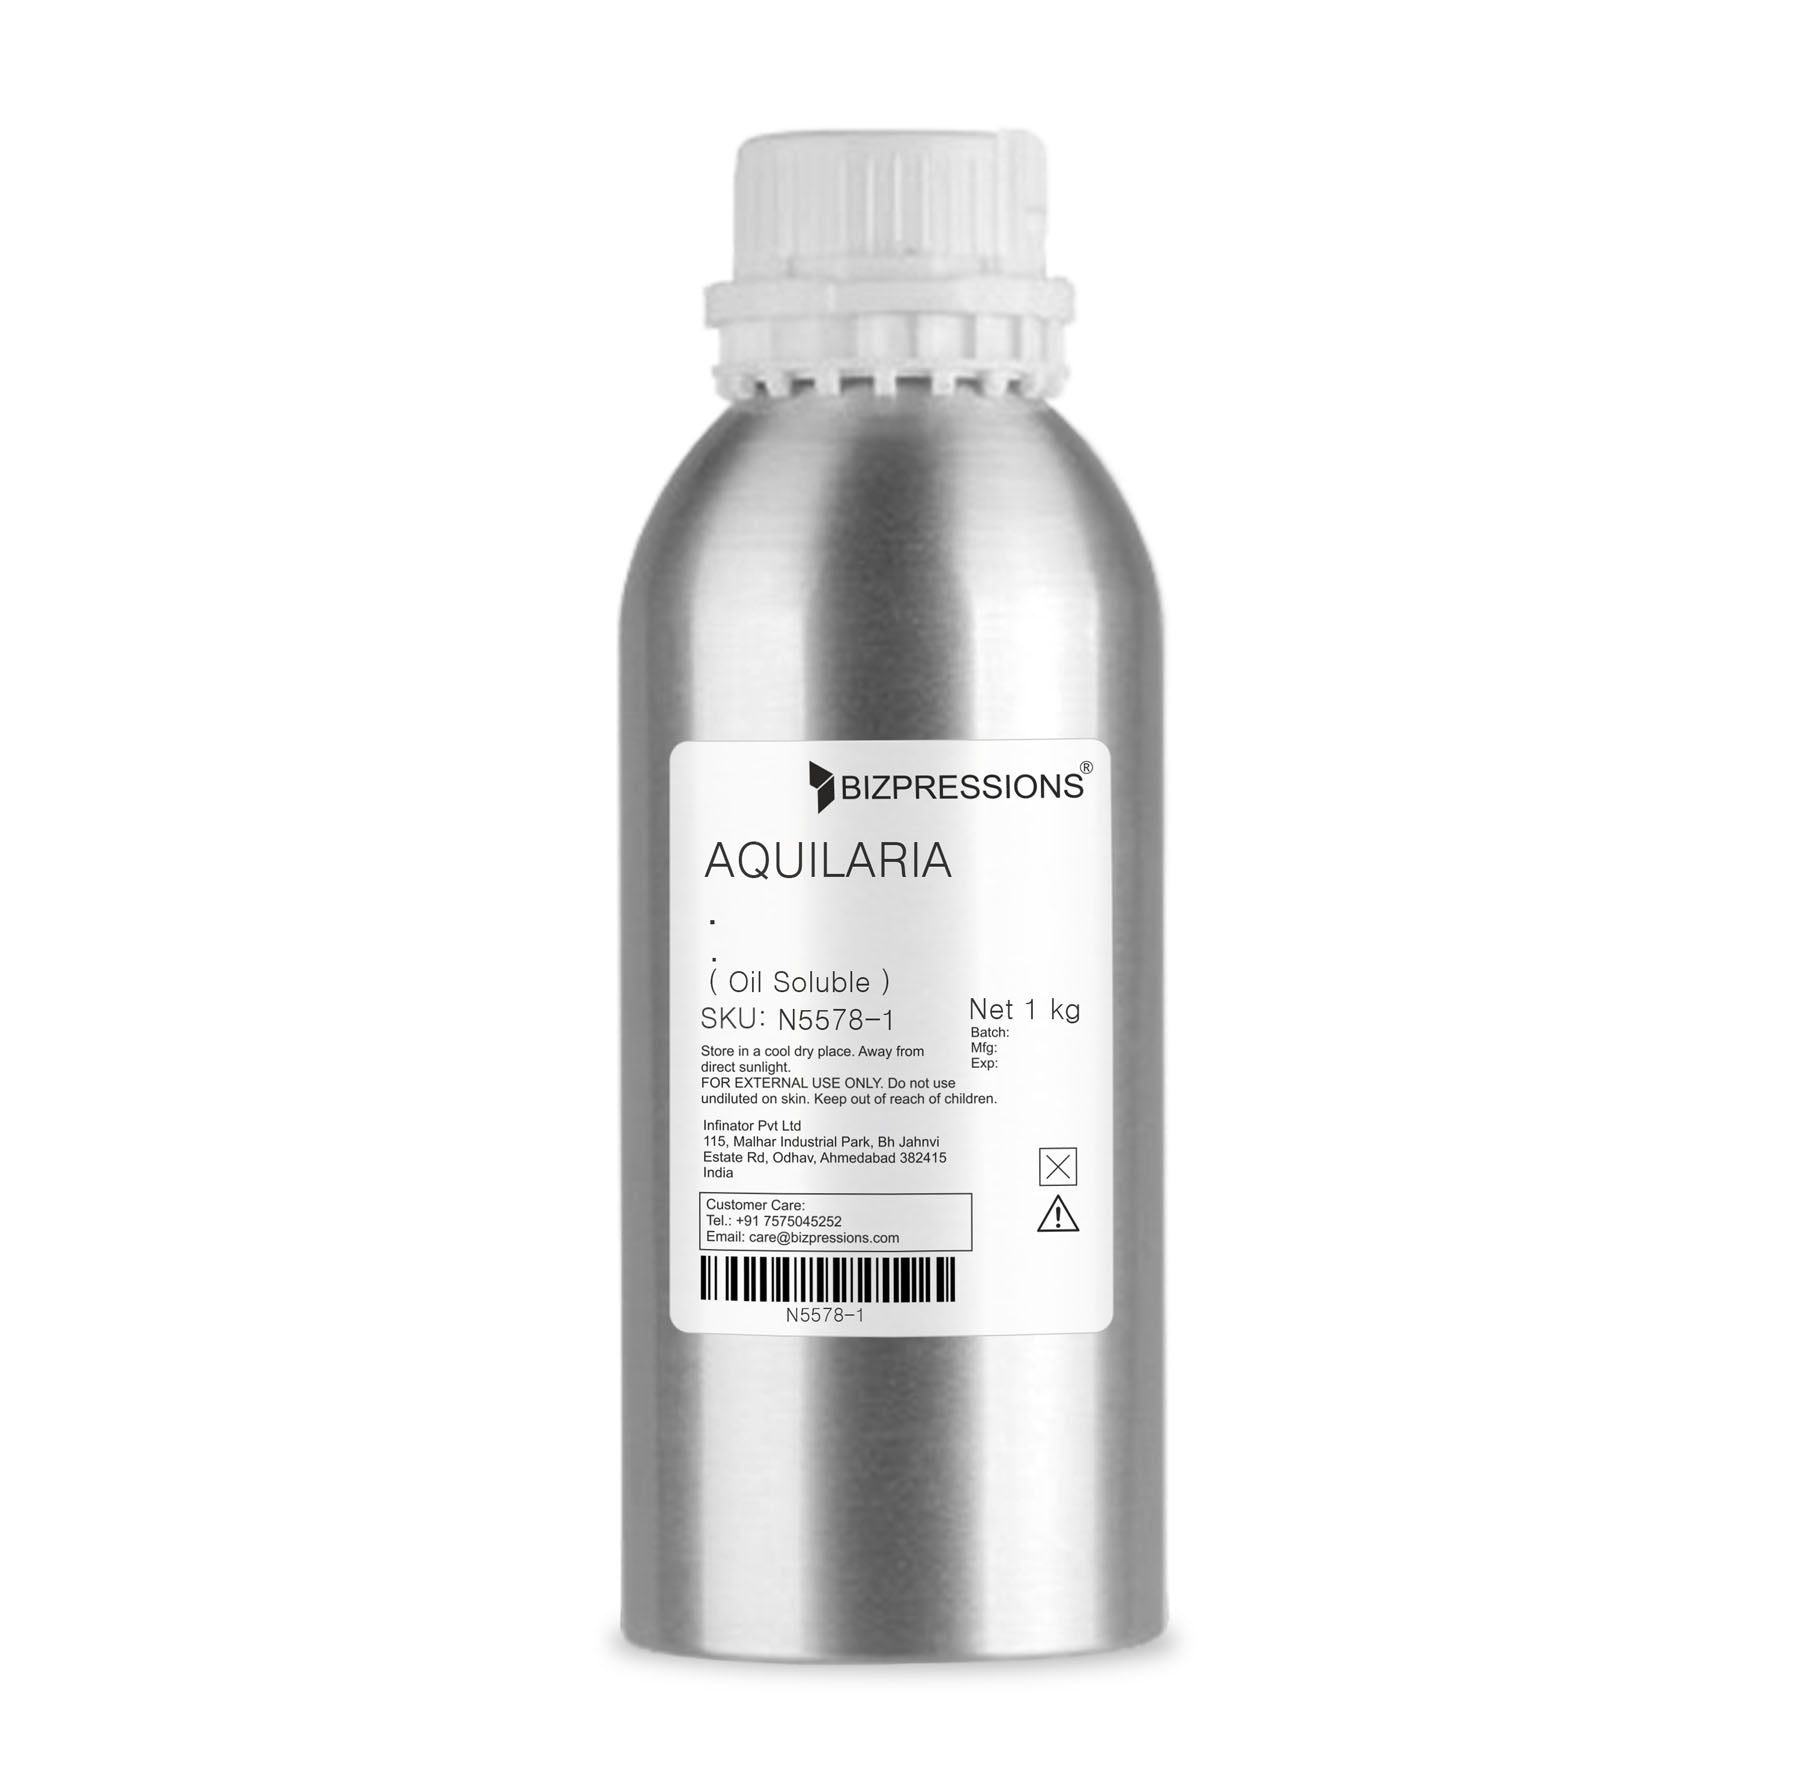 AQUILARIA - Fragrance ( Oil Soluble ) - 1 kg